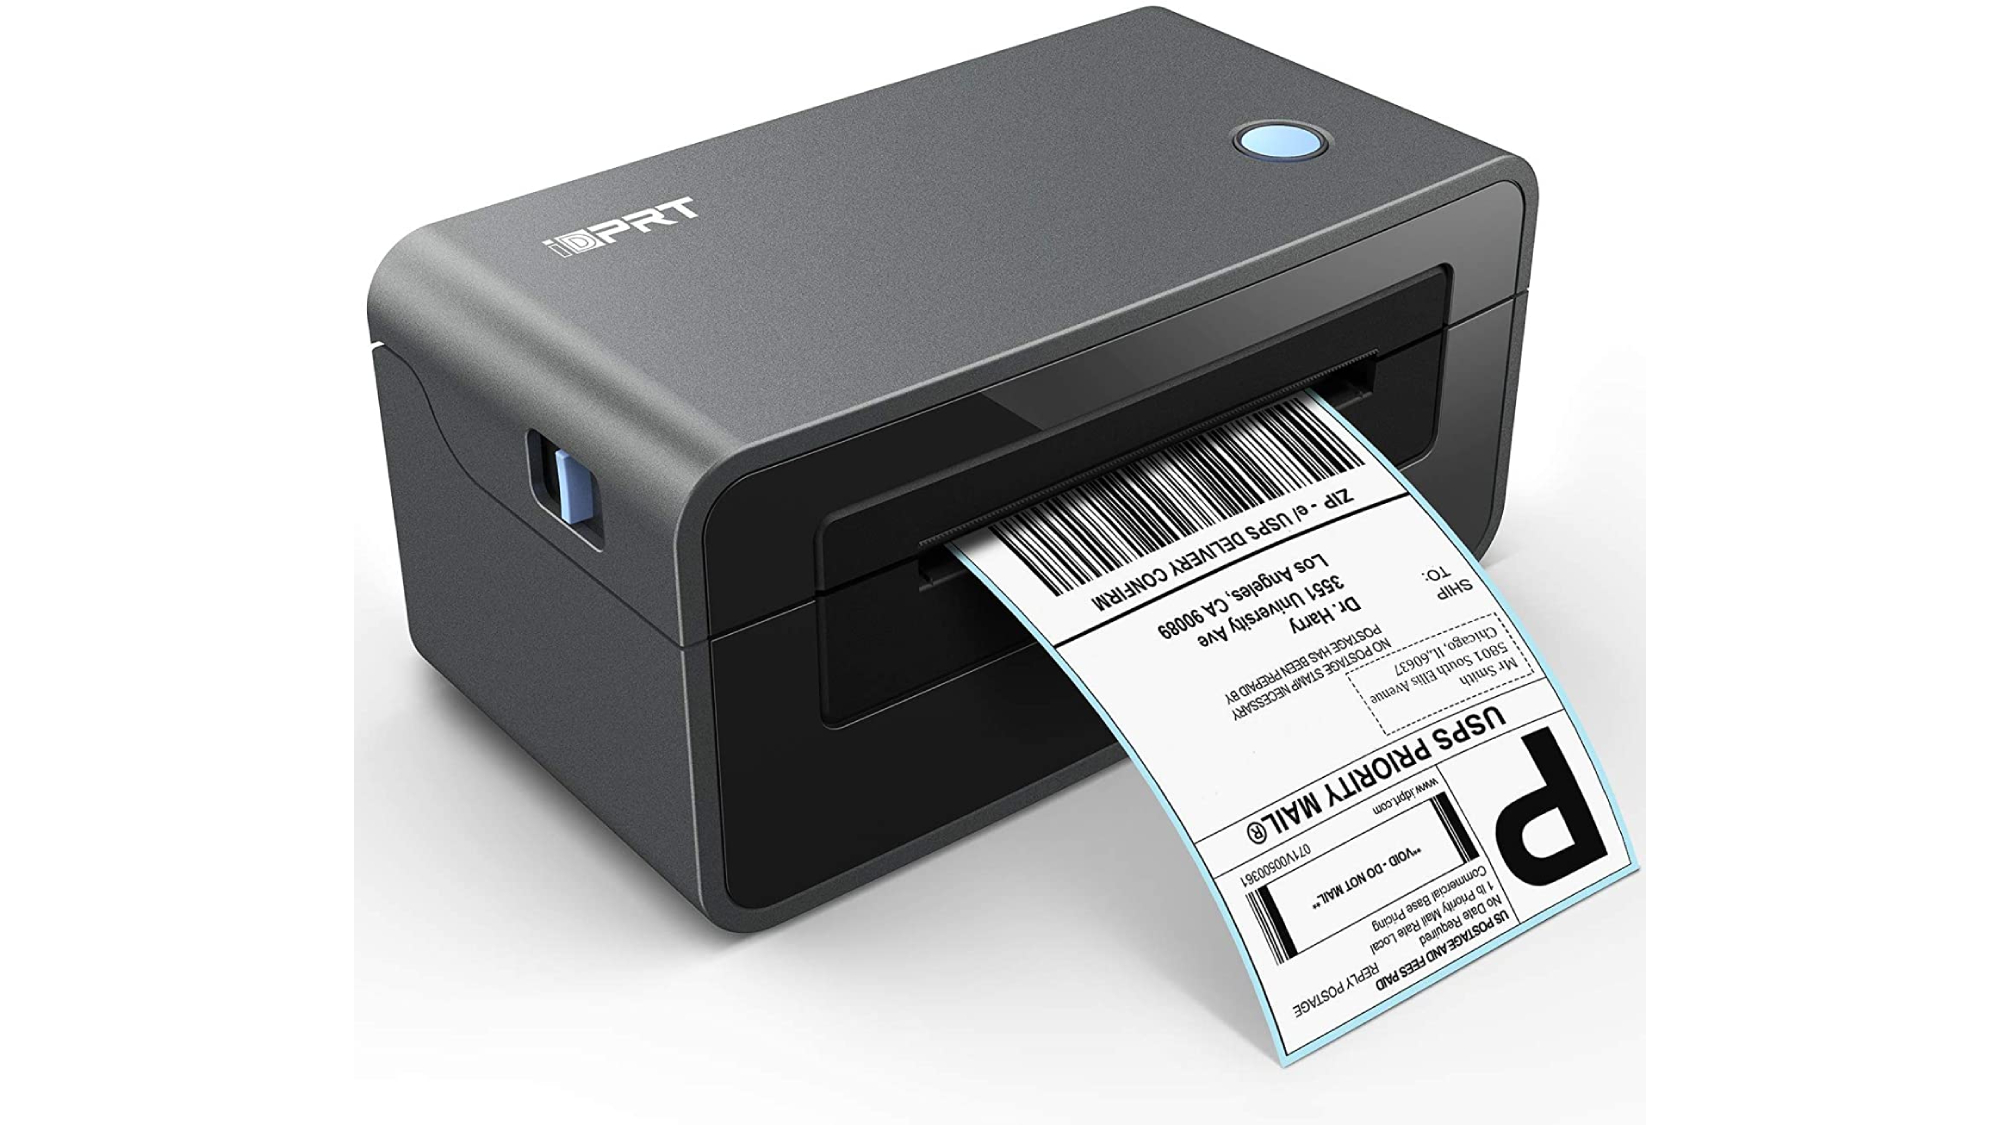 iDPRT SP410 Thermal Shipping Label Printer